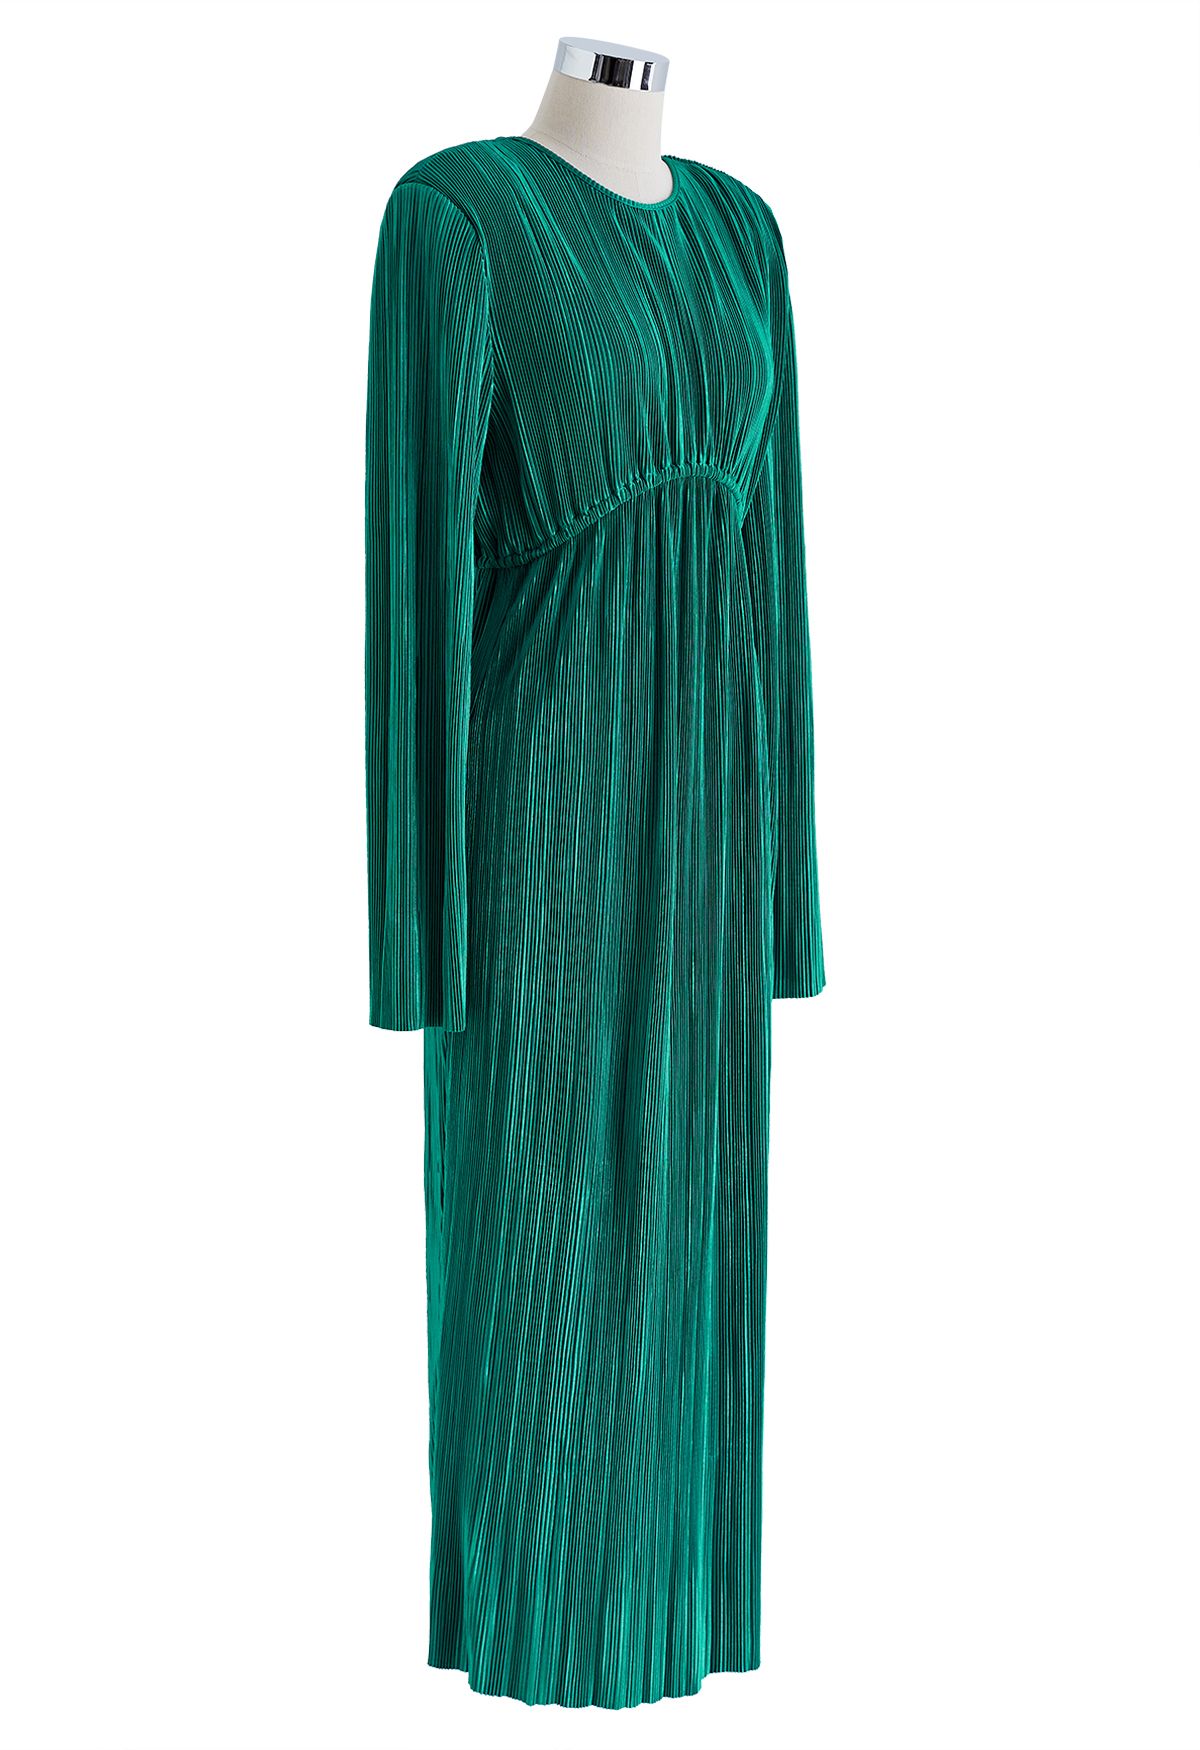 Pad Shoulder Open Back Plisse Midi Dress in Emerald